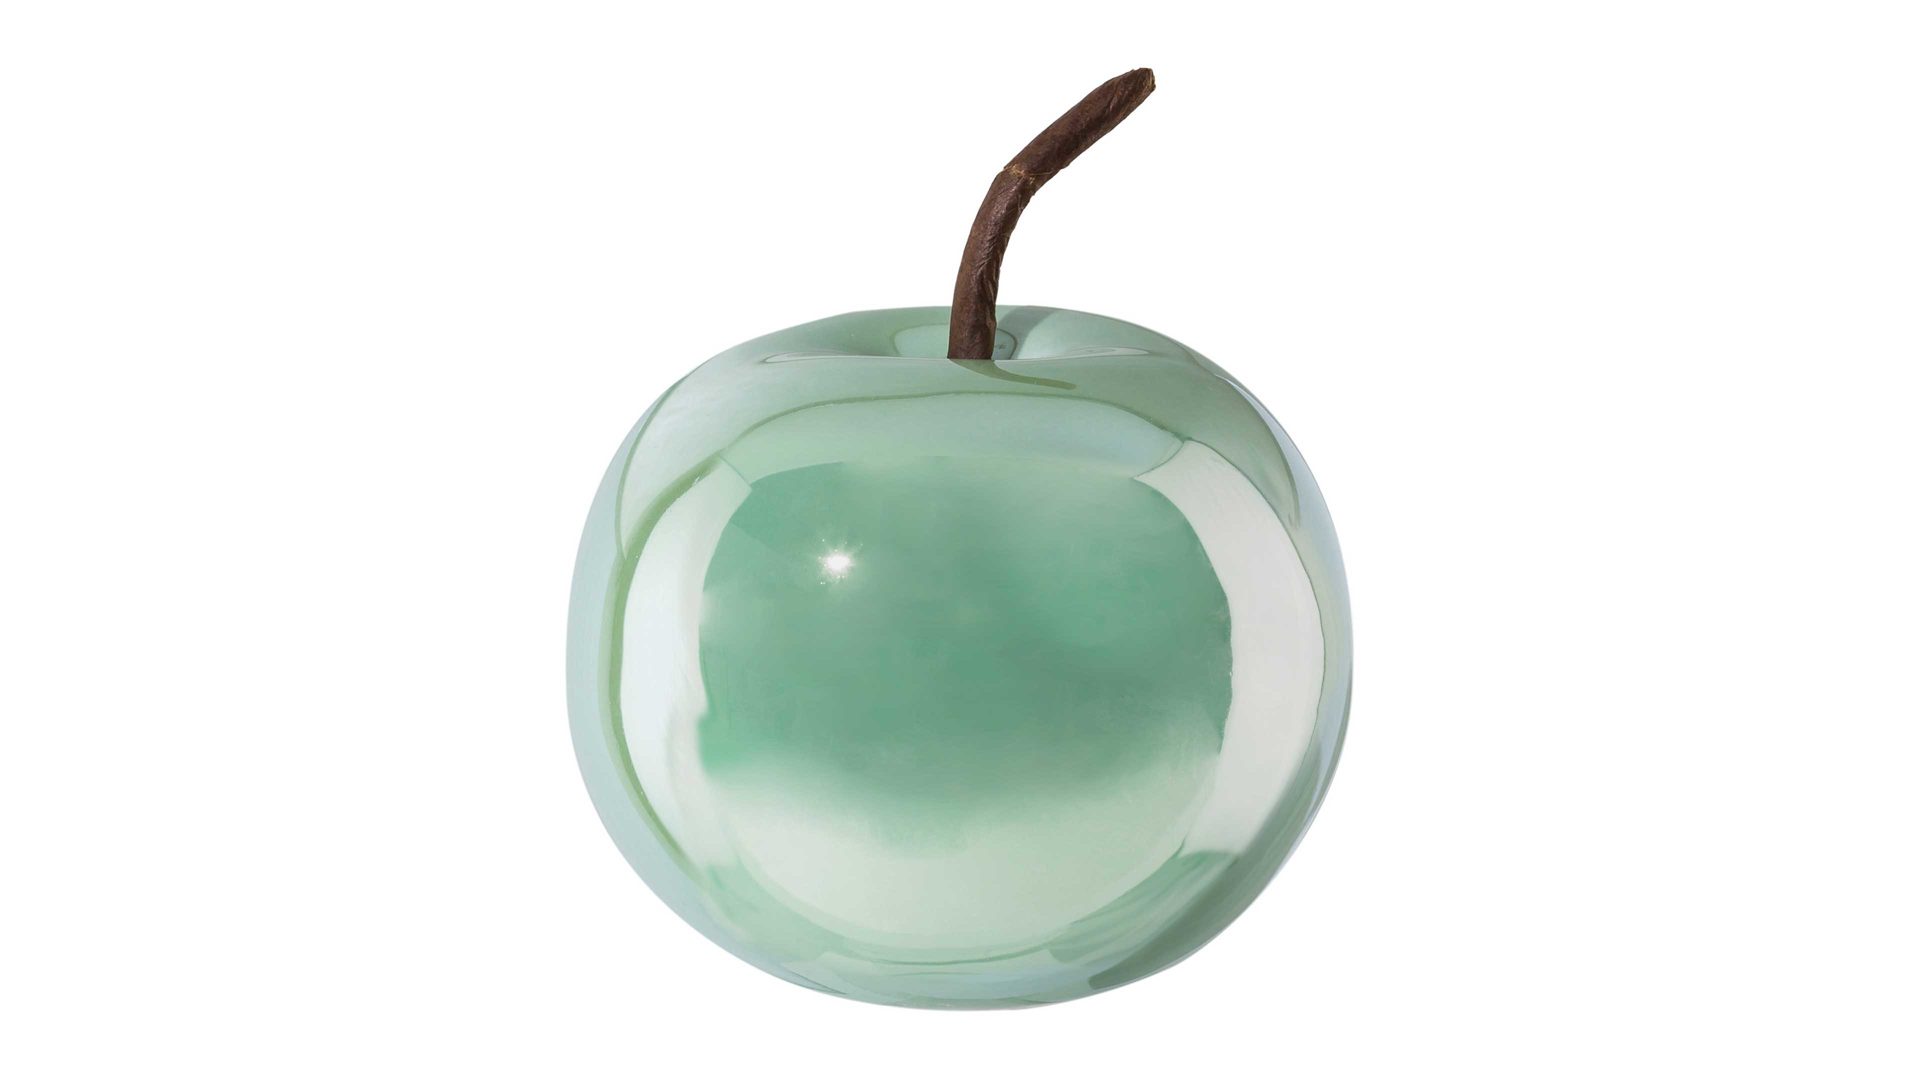 Figur Gasper aus Keramik in Grün Keramik-Apfel Glorian hellgrüne Keramik – Durchmesser ca. 8 cm